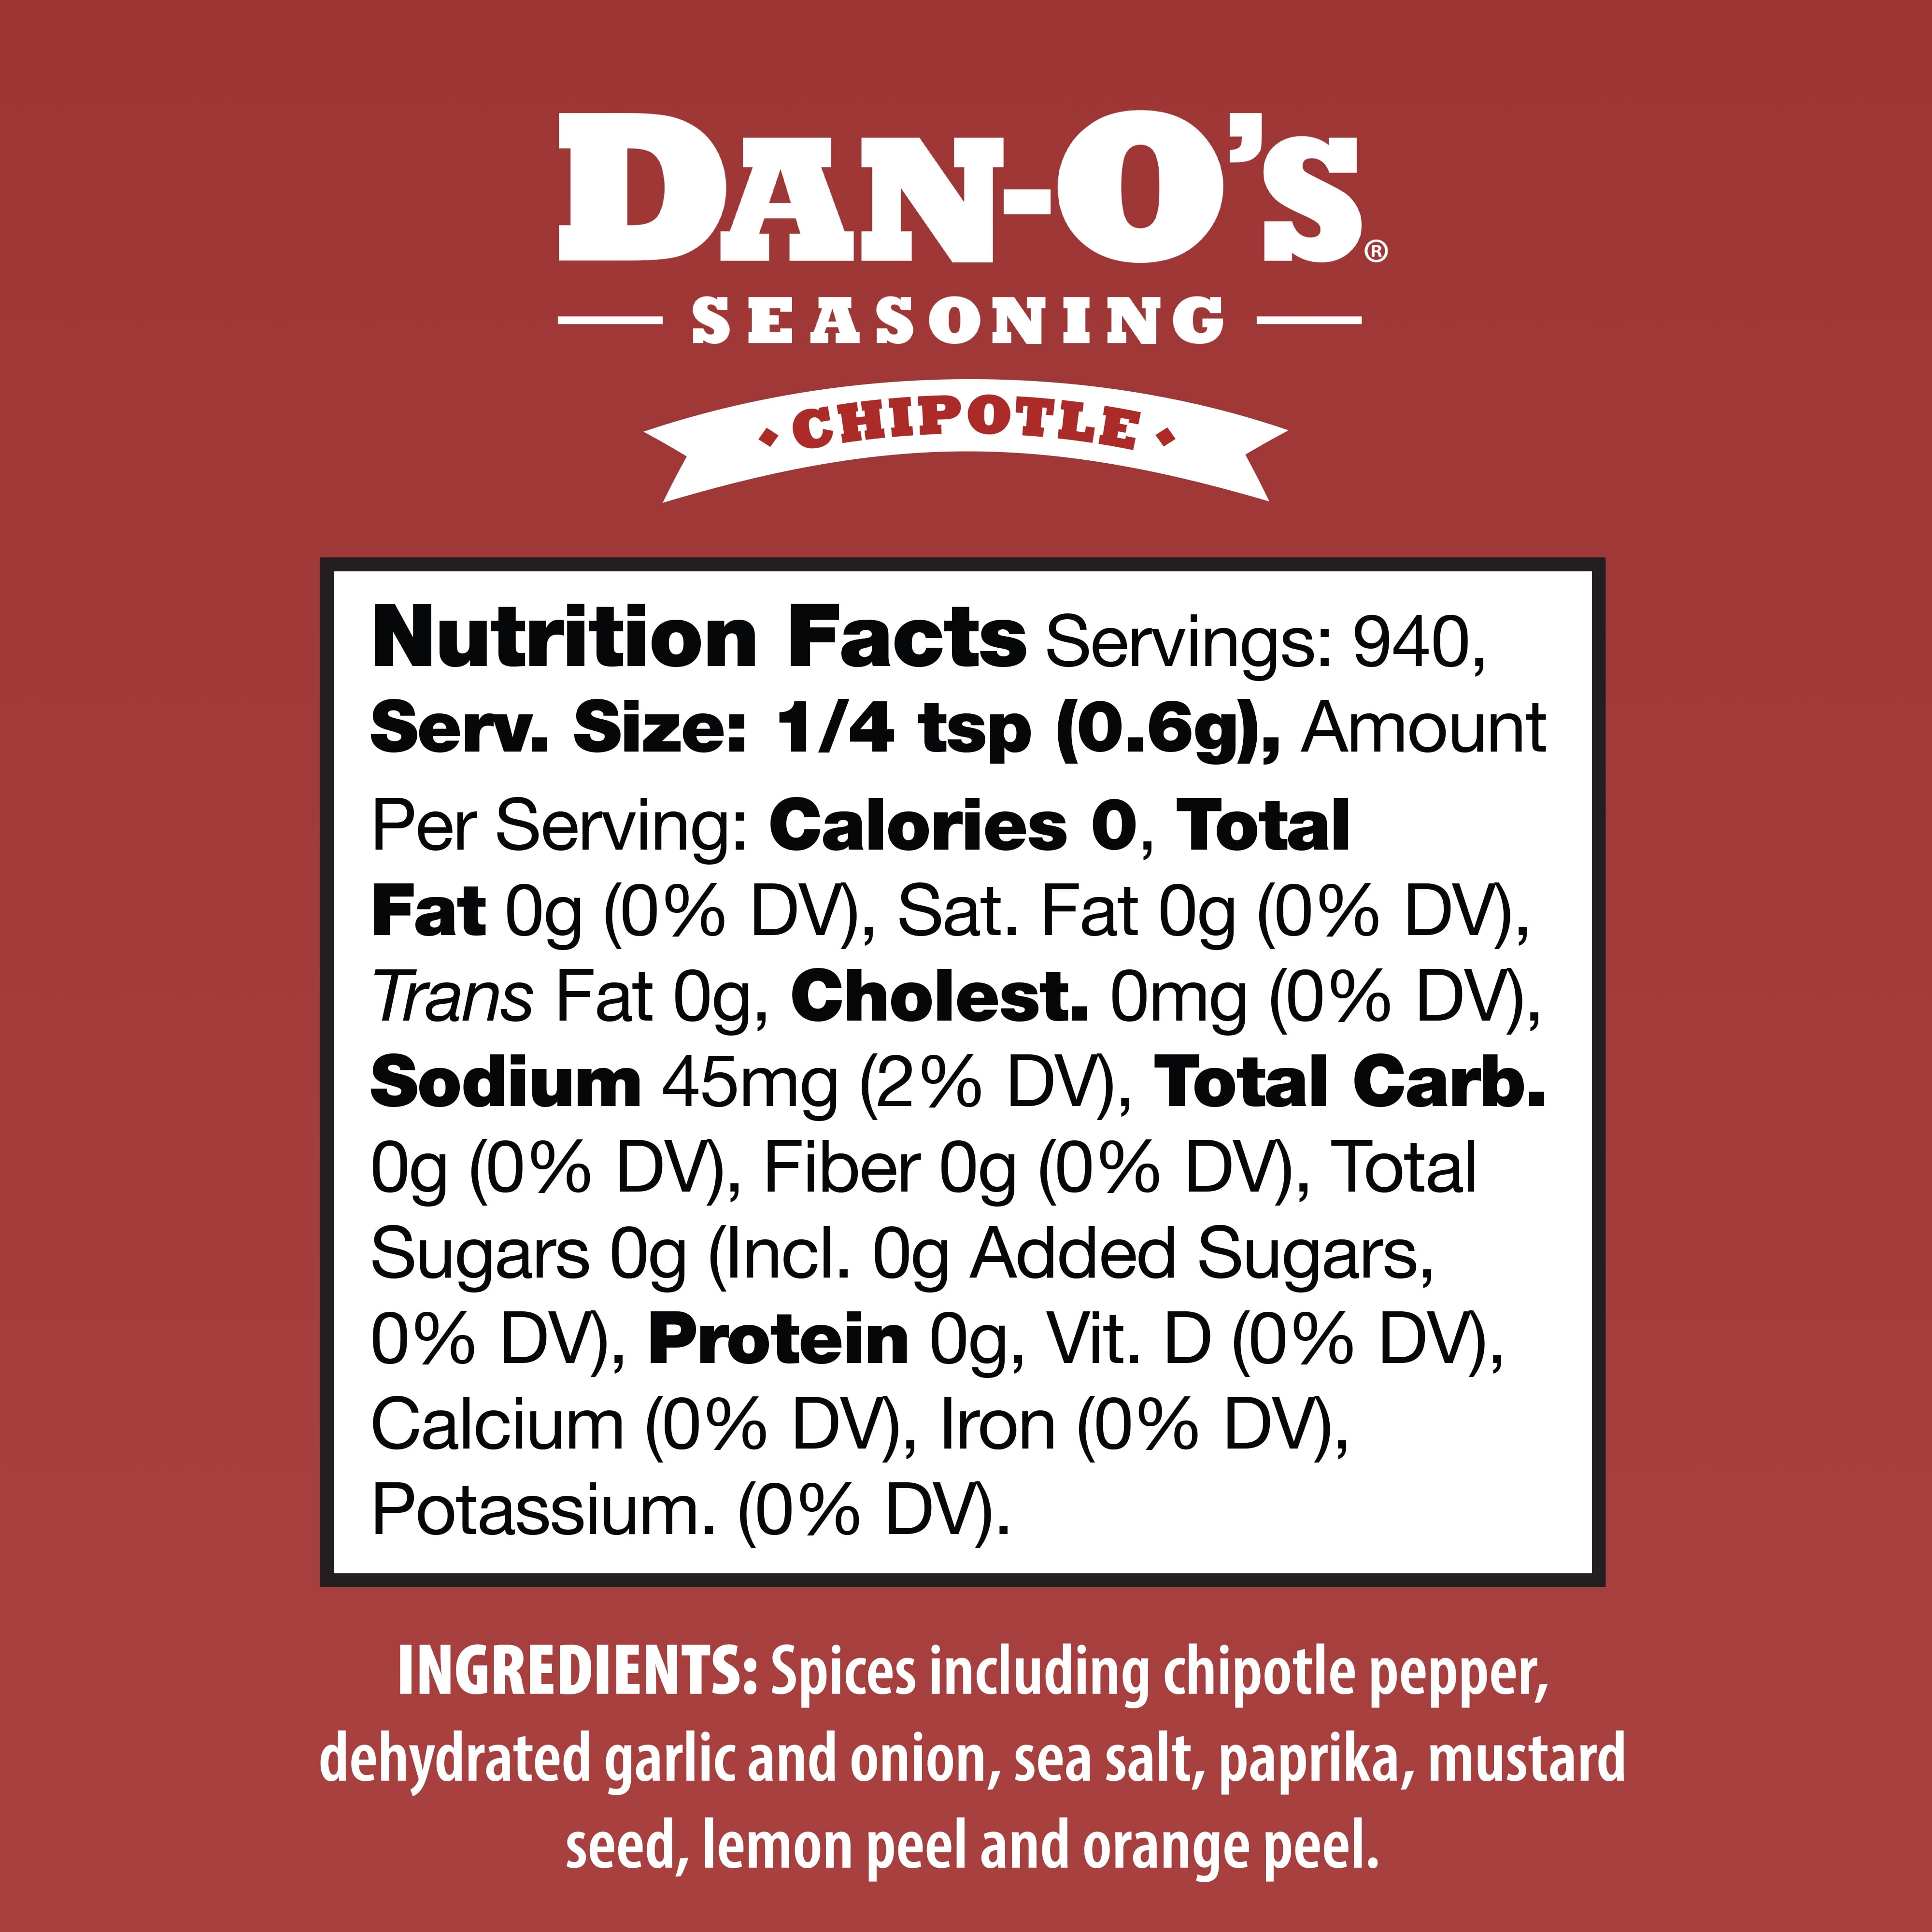 Dano's Seasoning 3 Pack Bundle - Original, Hot Chipotle & Spicy Flavors, All N